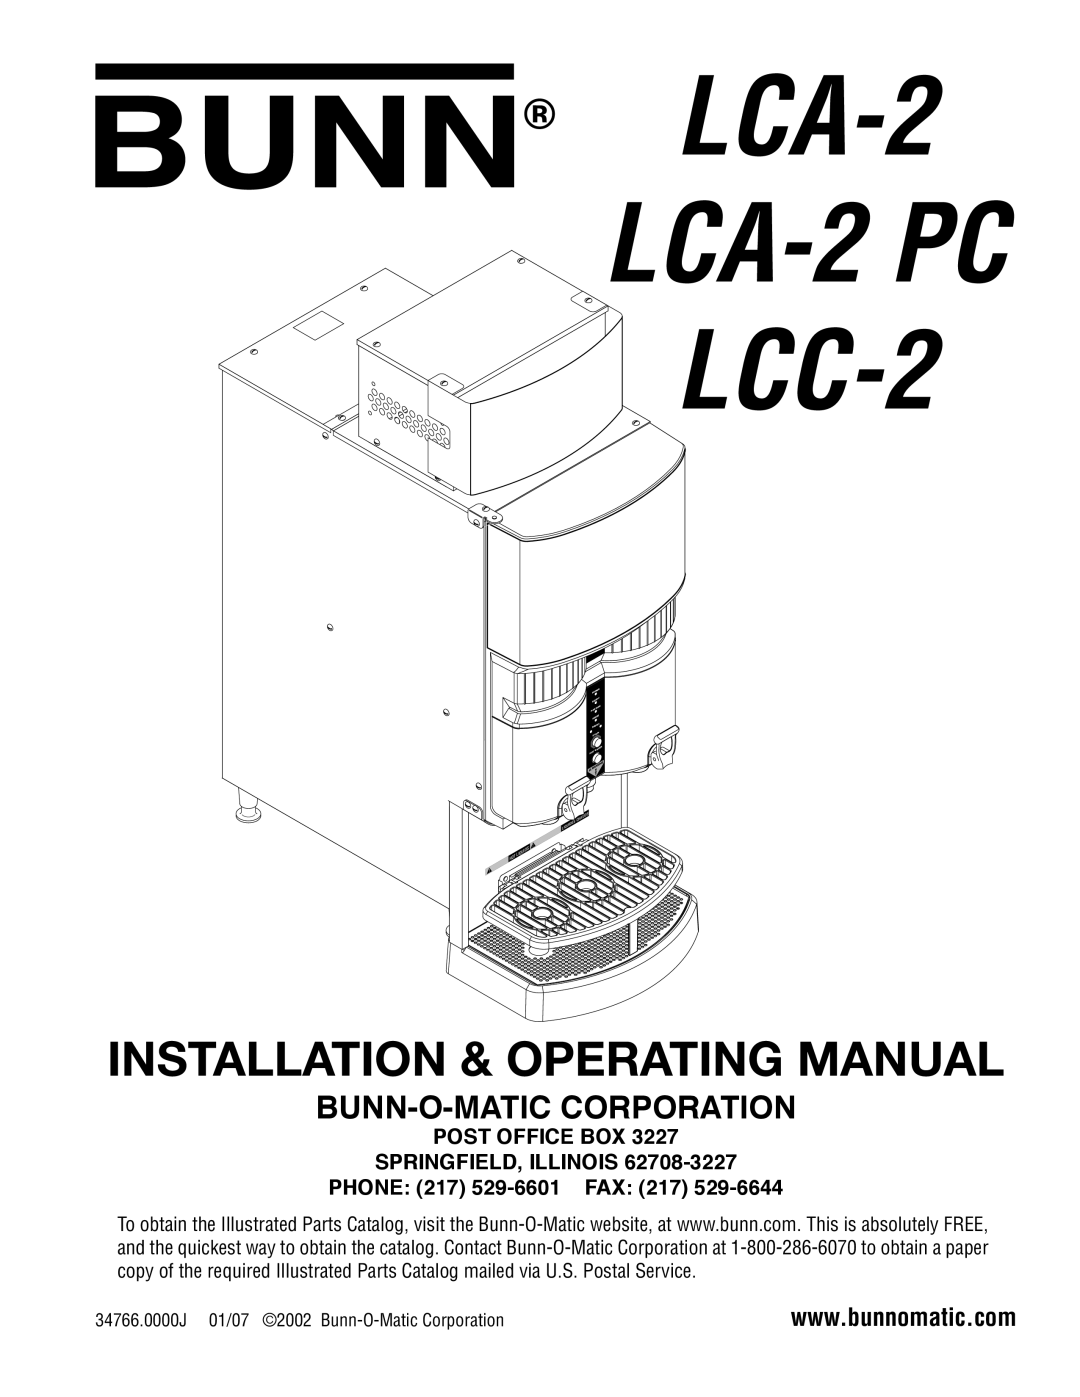 Bunn service manual LCC-2 LP, Bunn Chilled, Installation & Operating Guide, Bunn-O-Matic Corporation 